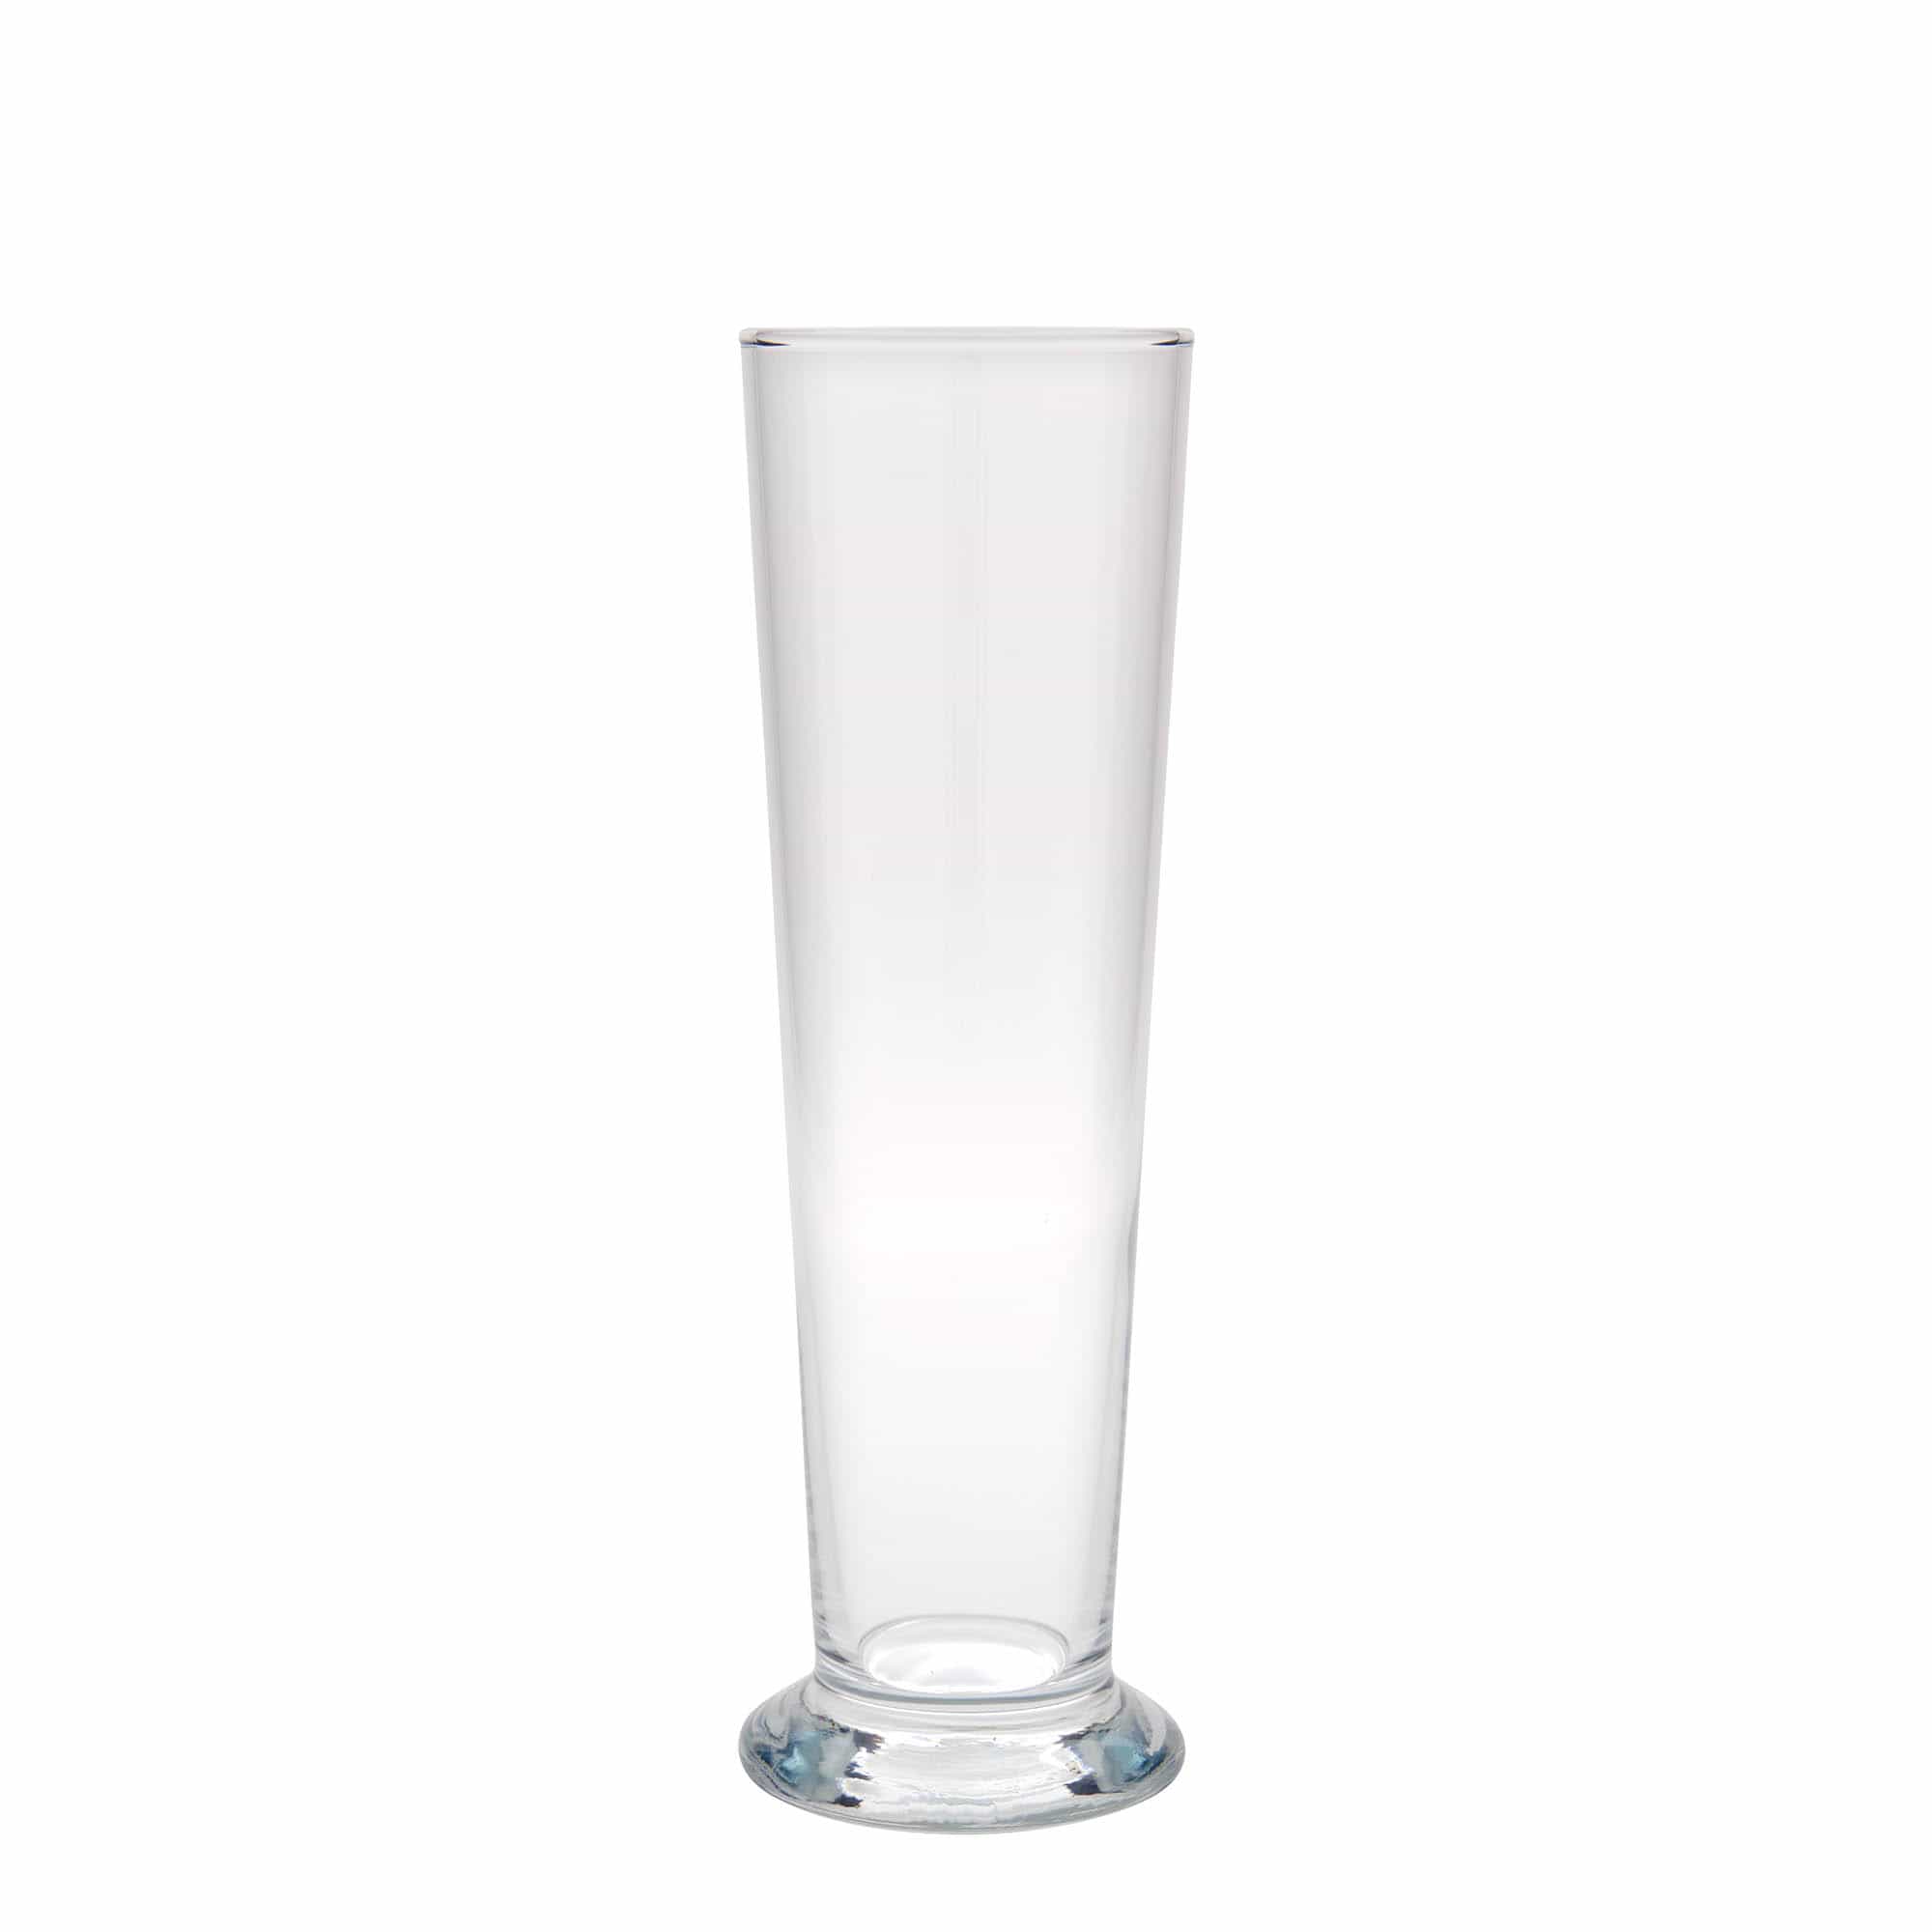 500 ml drinking glass 'Bierstange Basic', glass